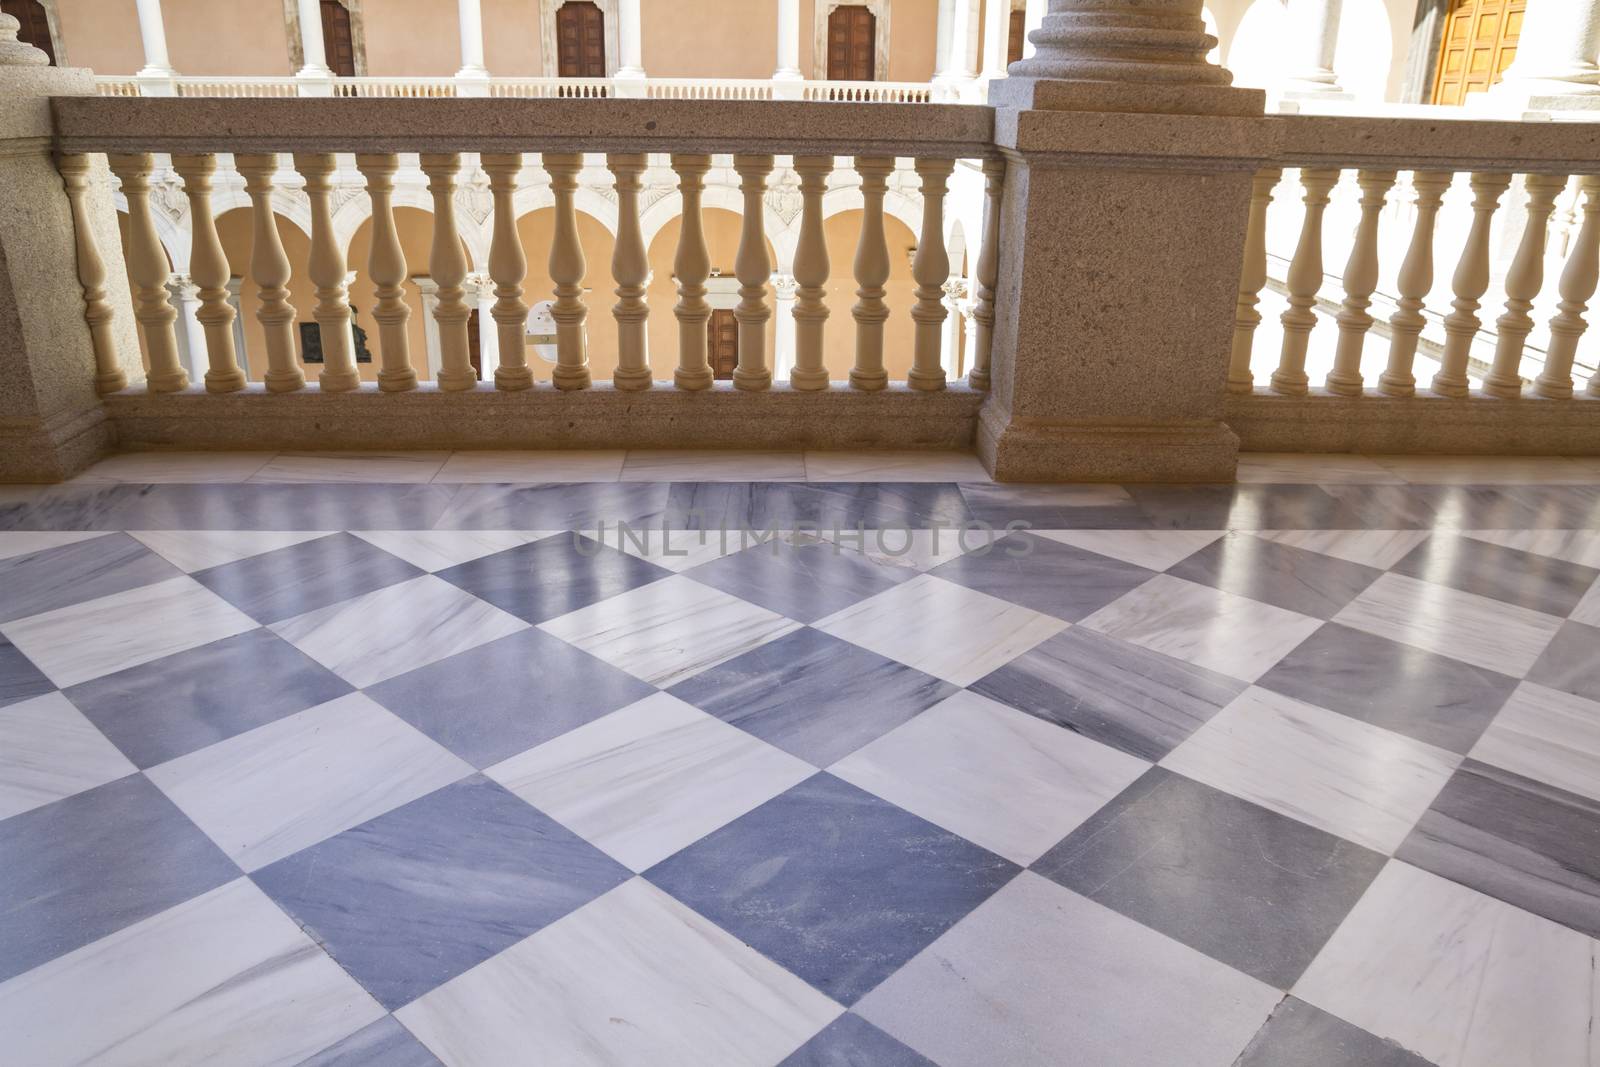 Indoor palace, Alcazar de Toledo, Spain